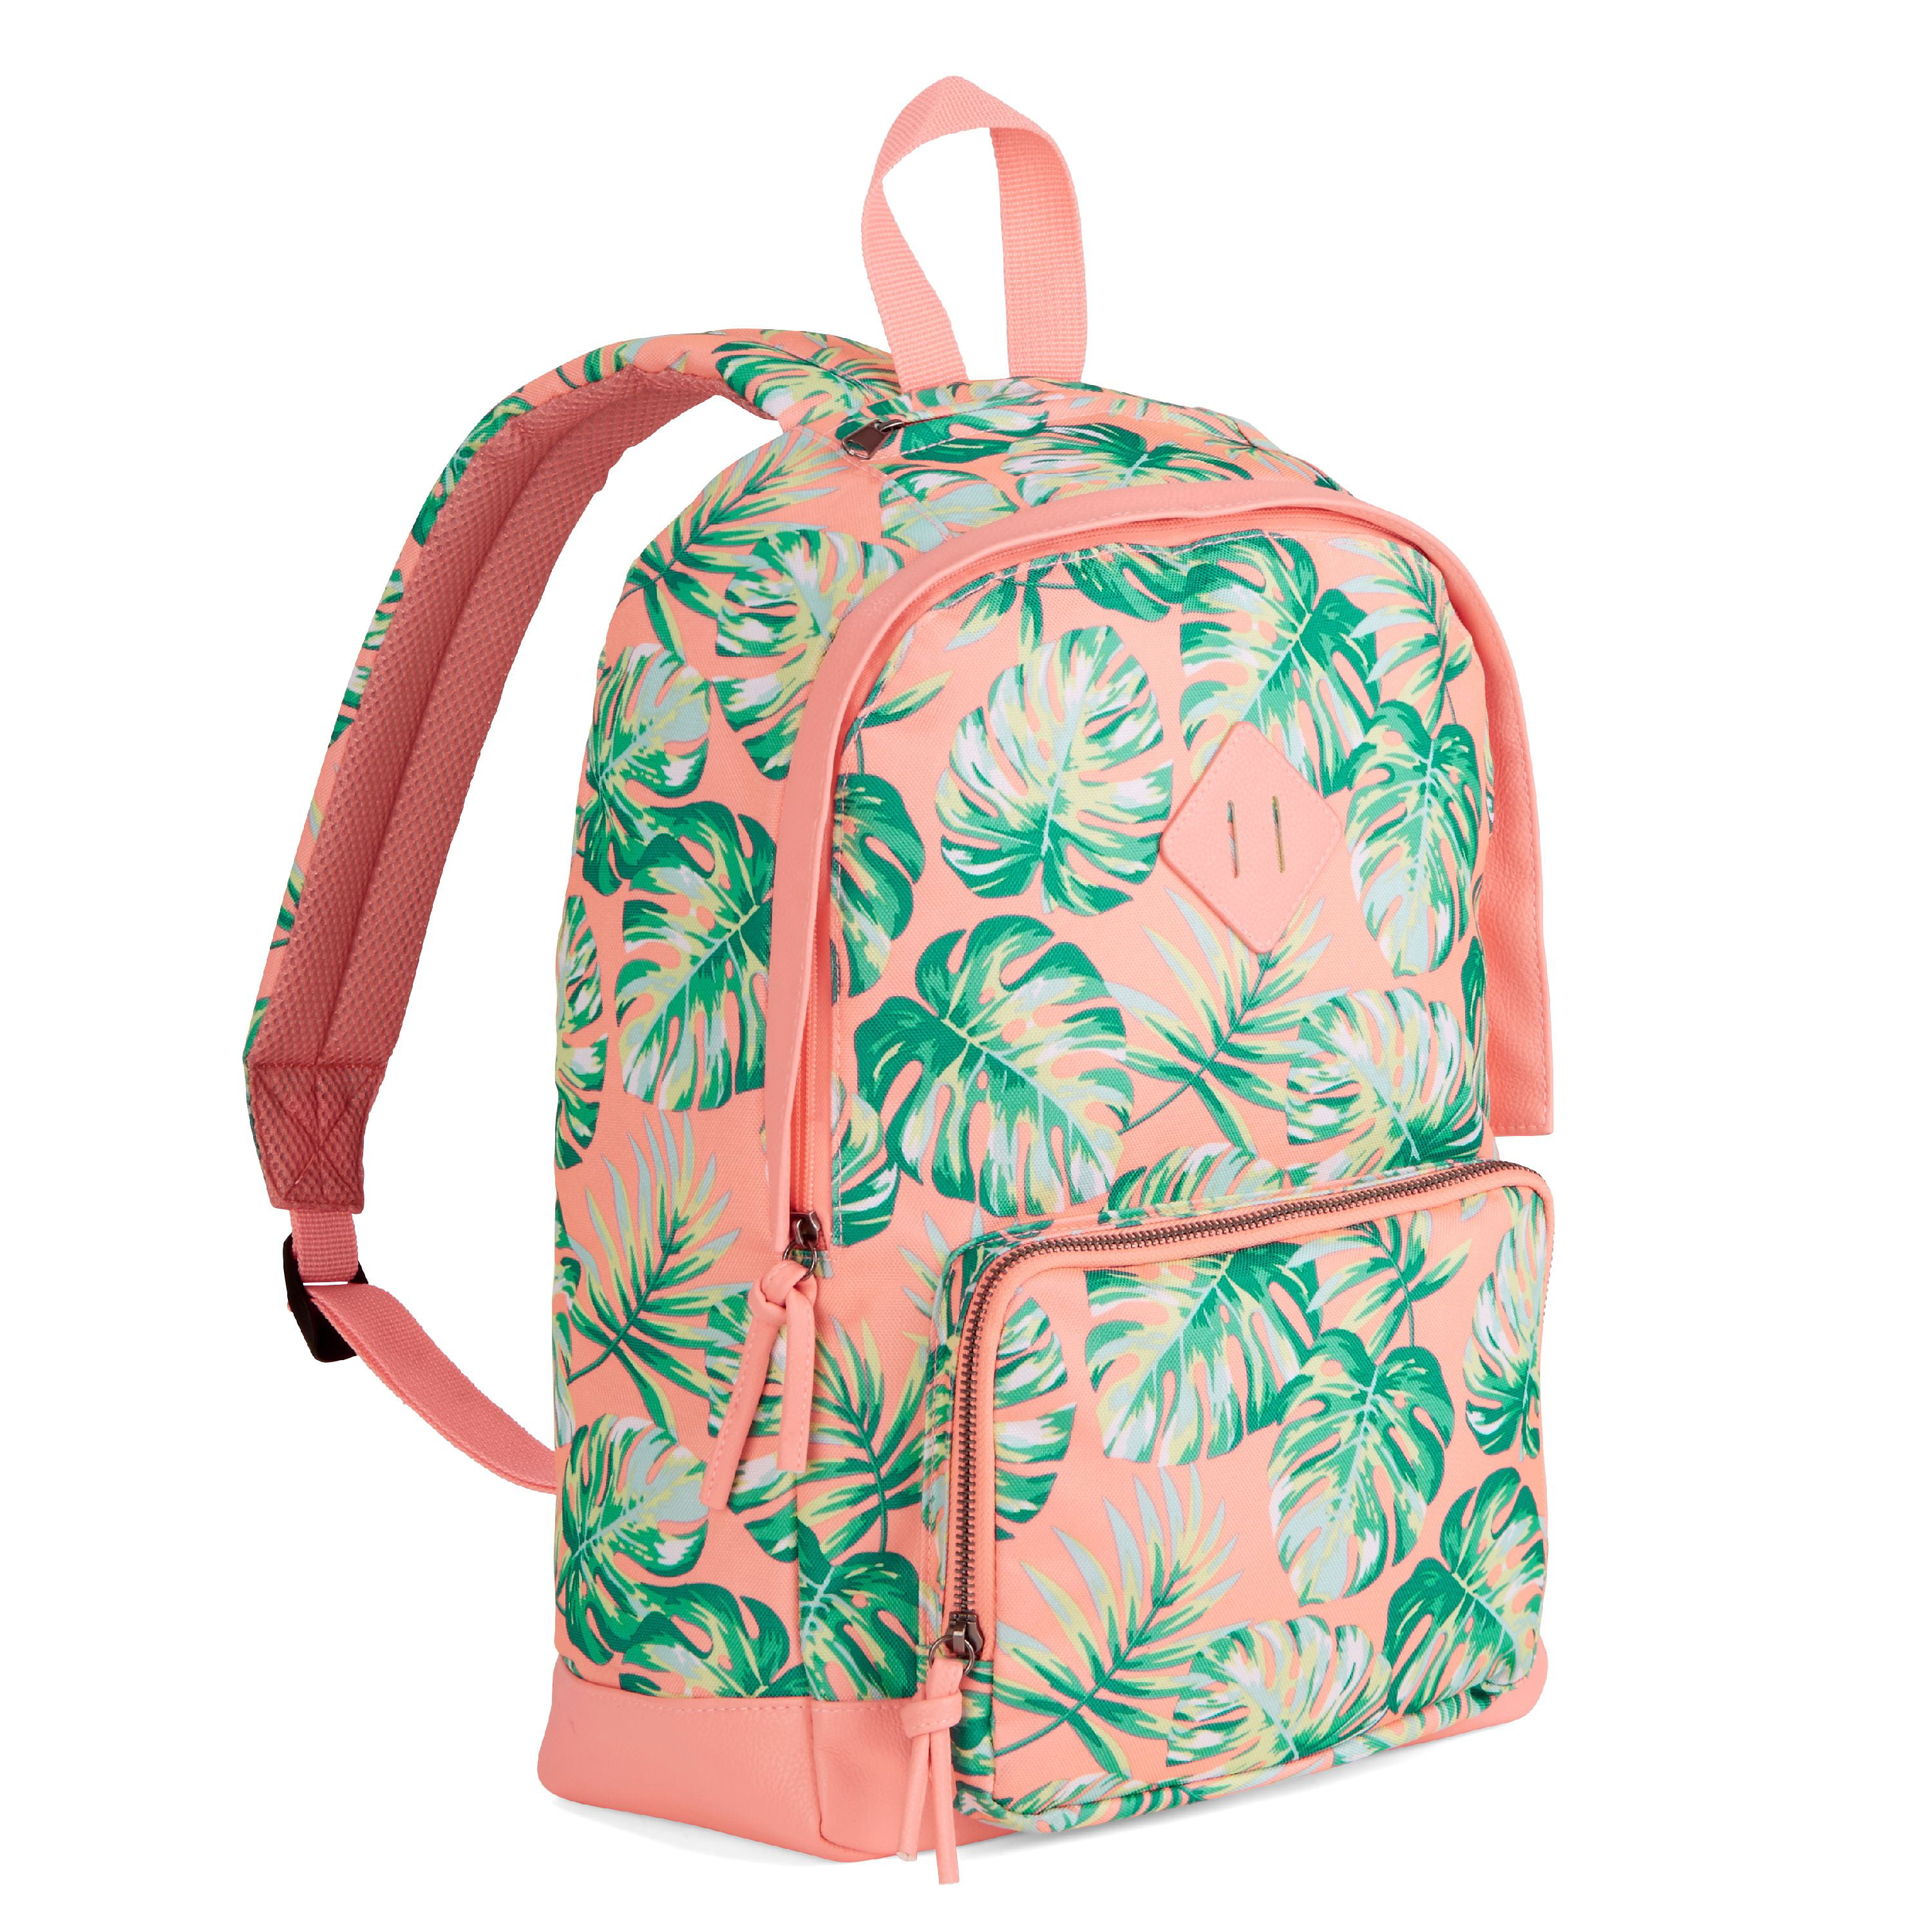 Laptop Backpack Summer Pineapple Fruit Pattern Large Capacity Bag Travel Daypack